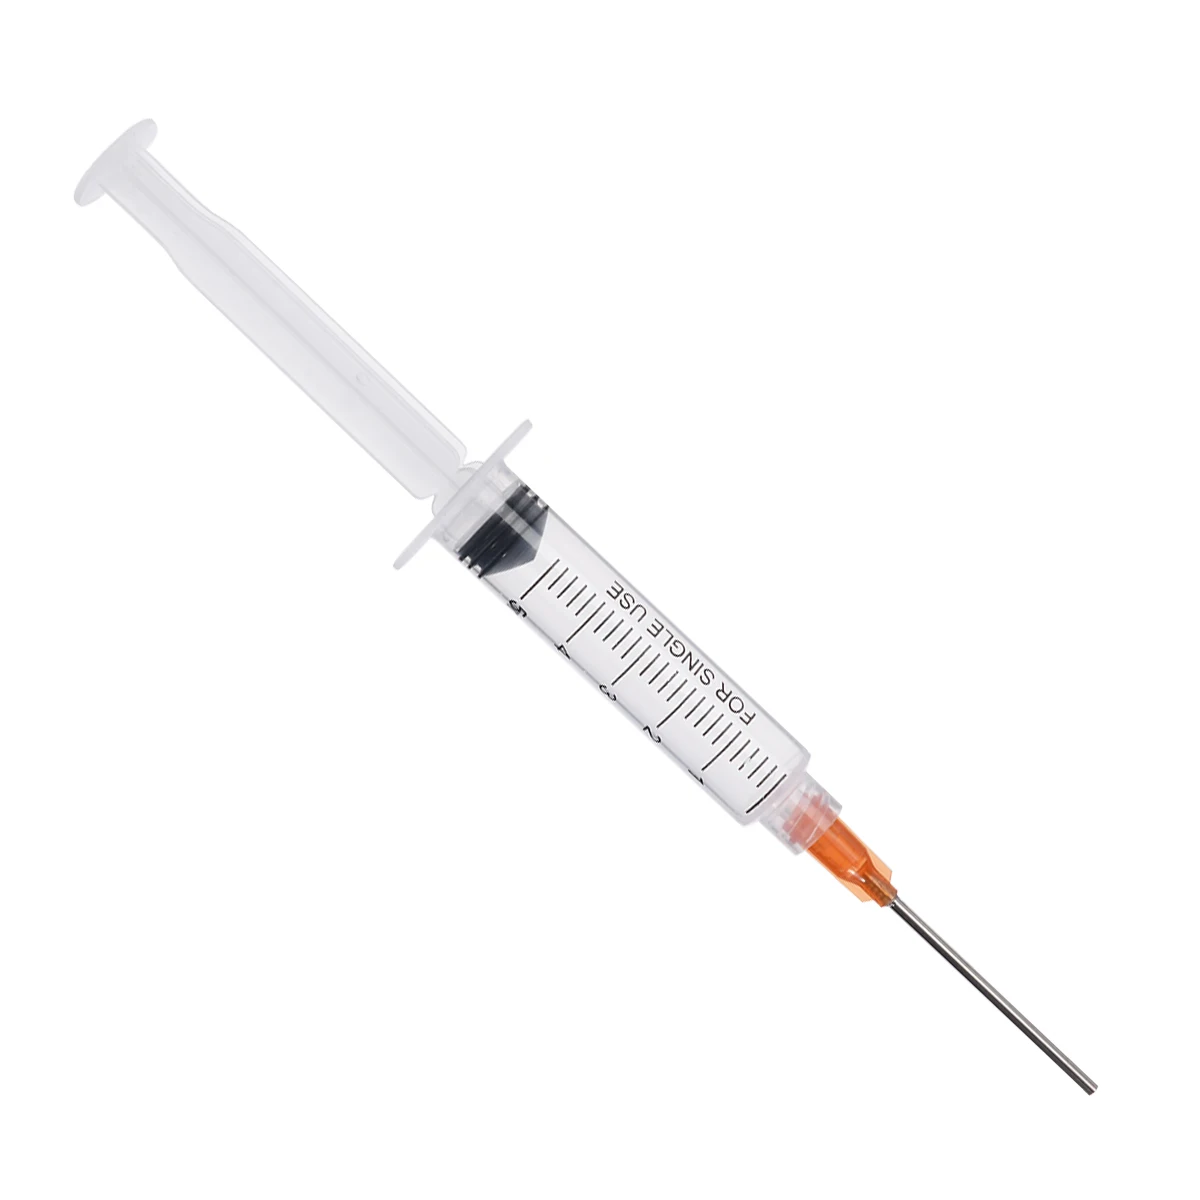 5PCS 5ml Industrial Dispensing Syringe Crimp Sealed Needle Tips For Glue Oil Ink Syringes Measure Tool Supplies